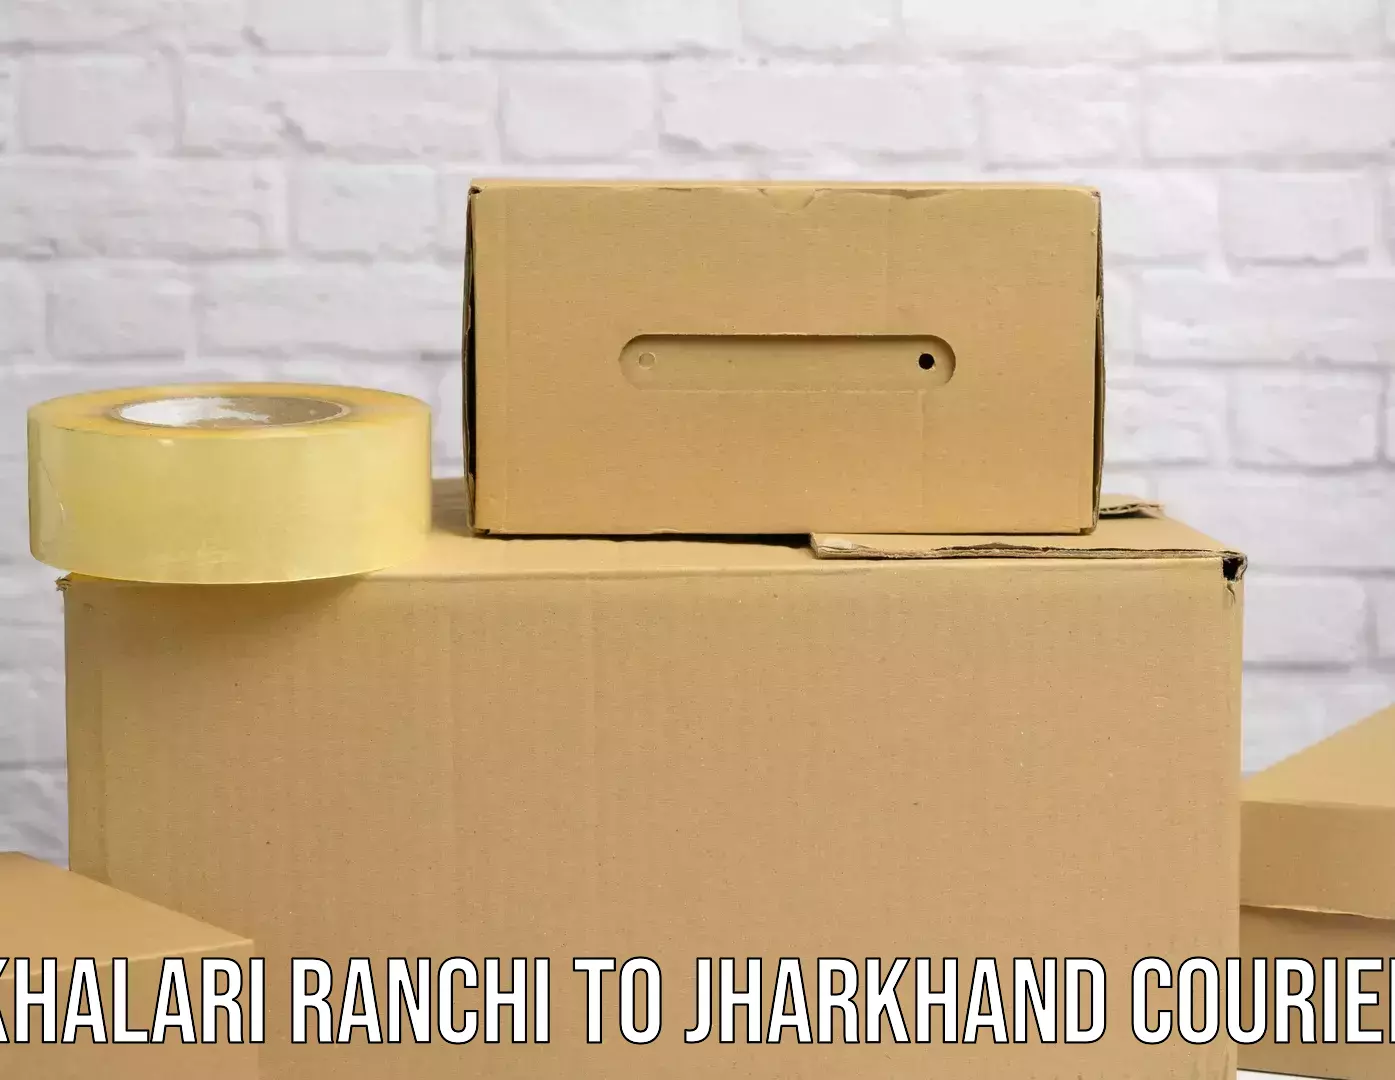 Fast delivery service Khalari Ranchi to Jharkhand